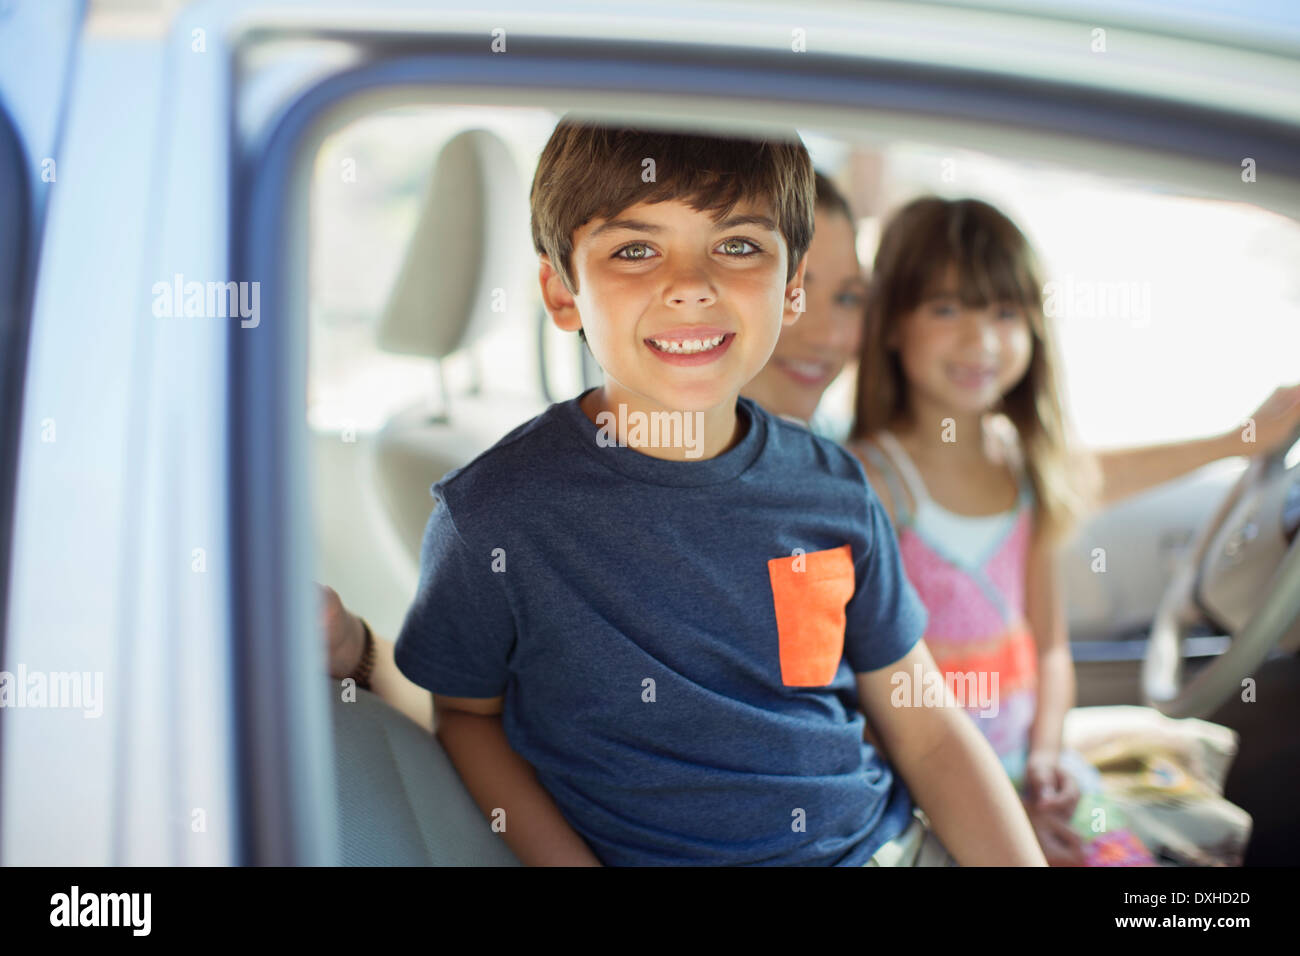 Portrait of smiling boy inside car Stock Photo